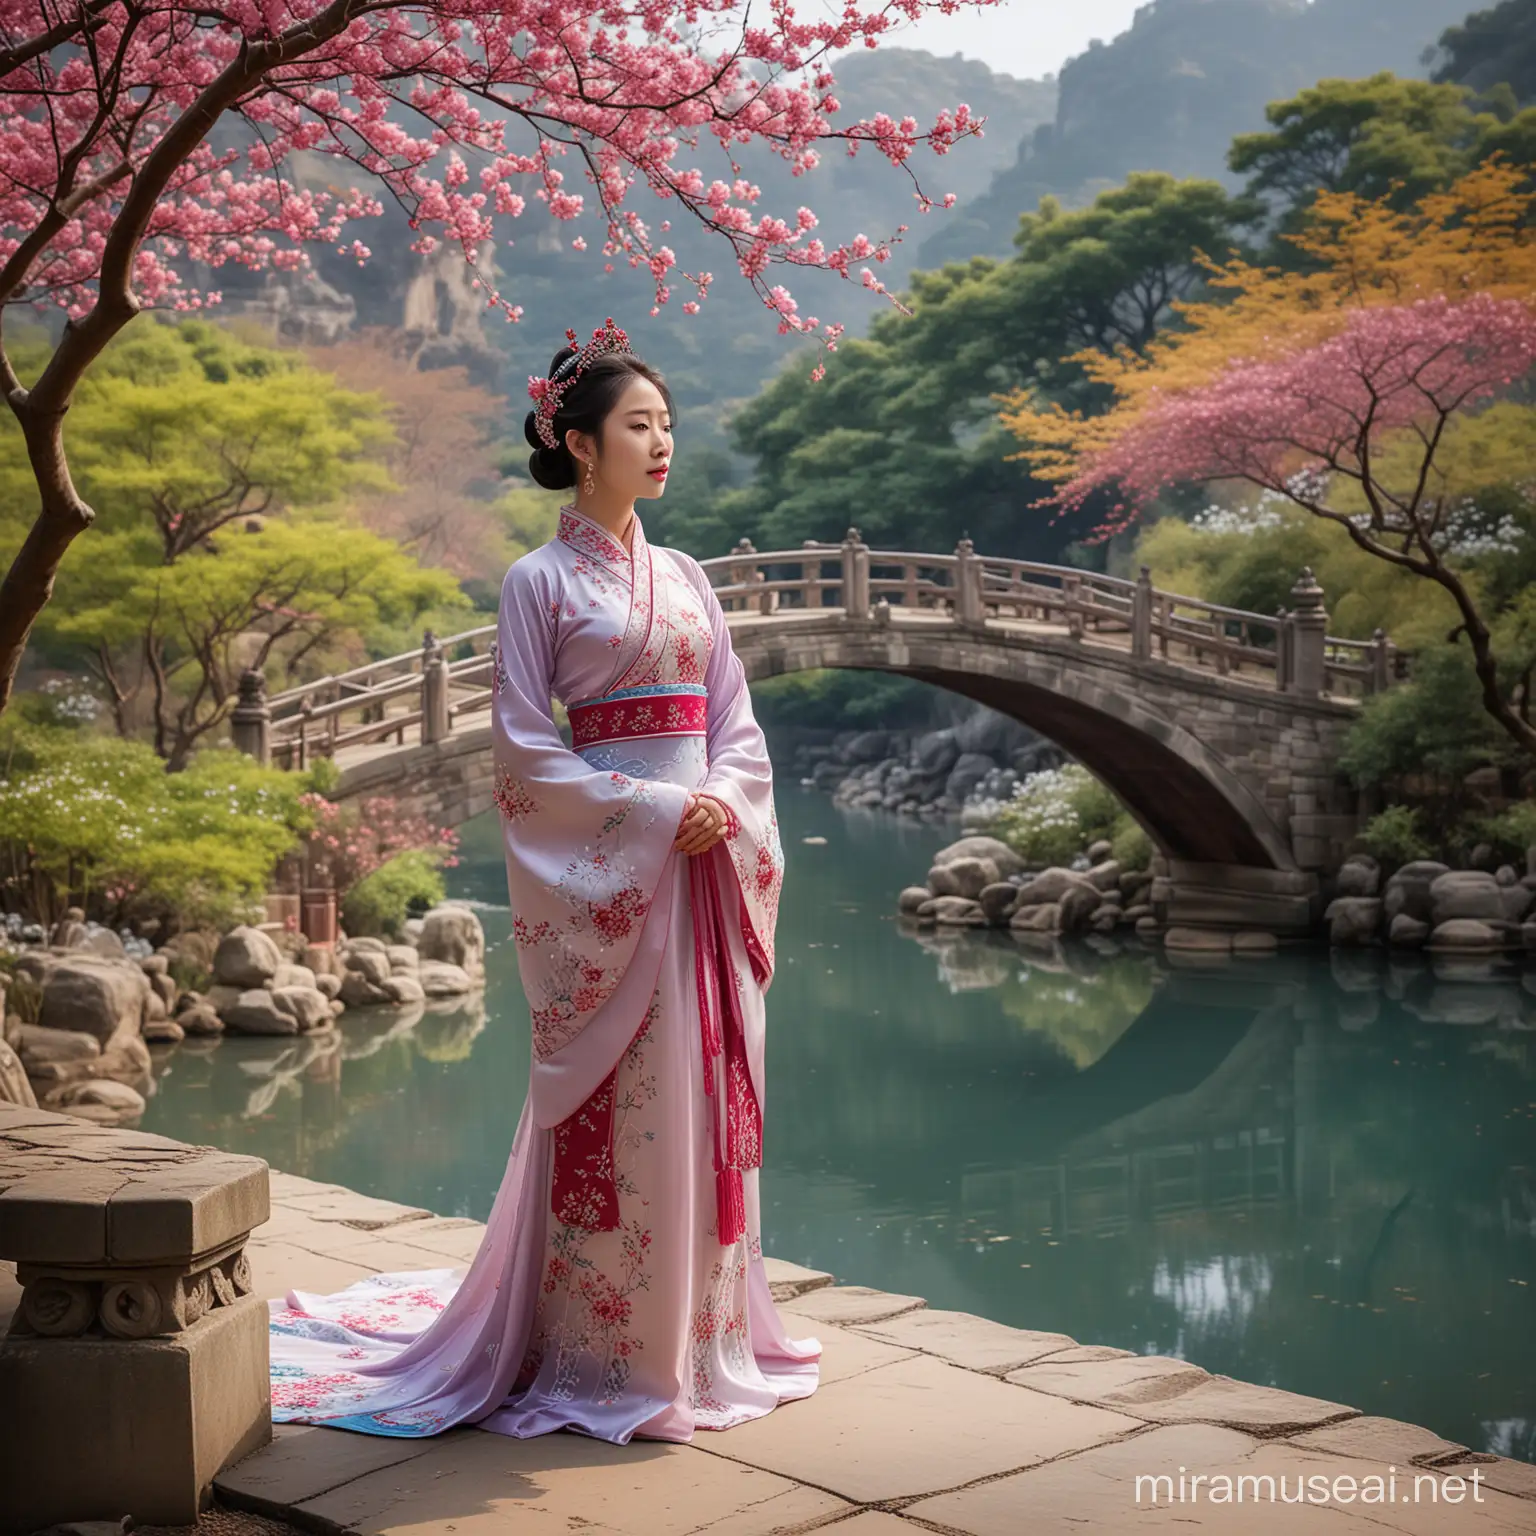 seorang putri cantik memakai gaun tradisional China yang rumit perpaduan warna putih biru muda ,memakai mahkota permata ruby yang mengalir indah elegan berdiri menatap ke depan di tepi sungai taman dari dunia lain yang menakjubkan dan penuh warna warni cerah. latar jembatan lengkung dan ranting plum pink